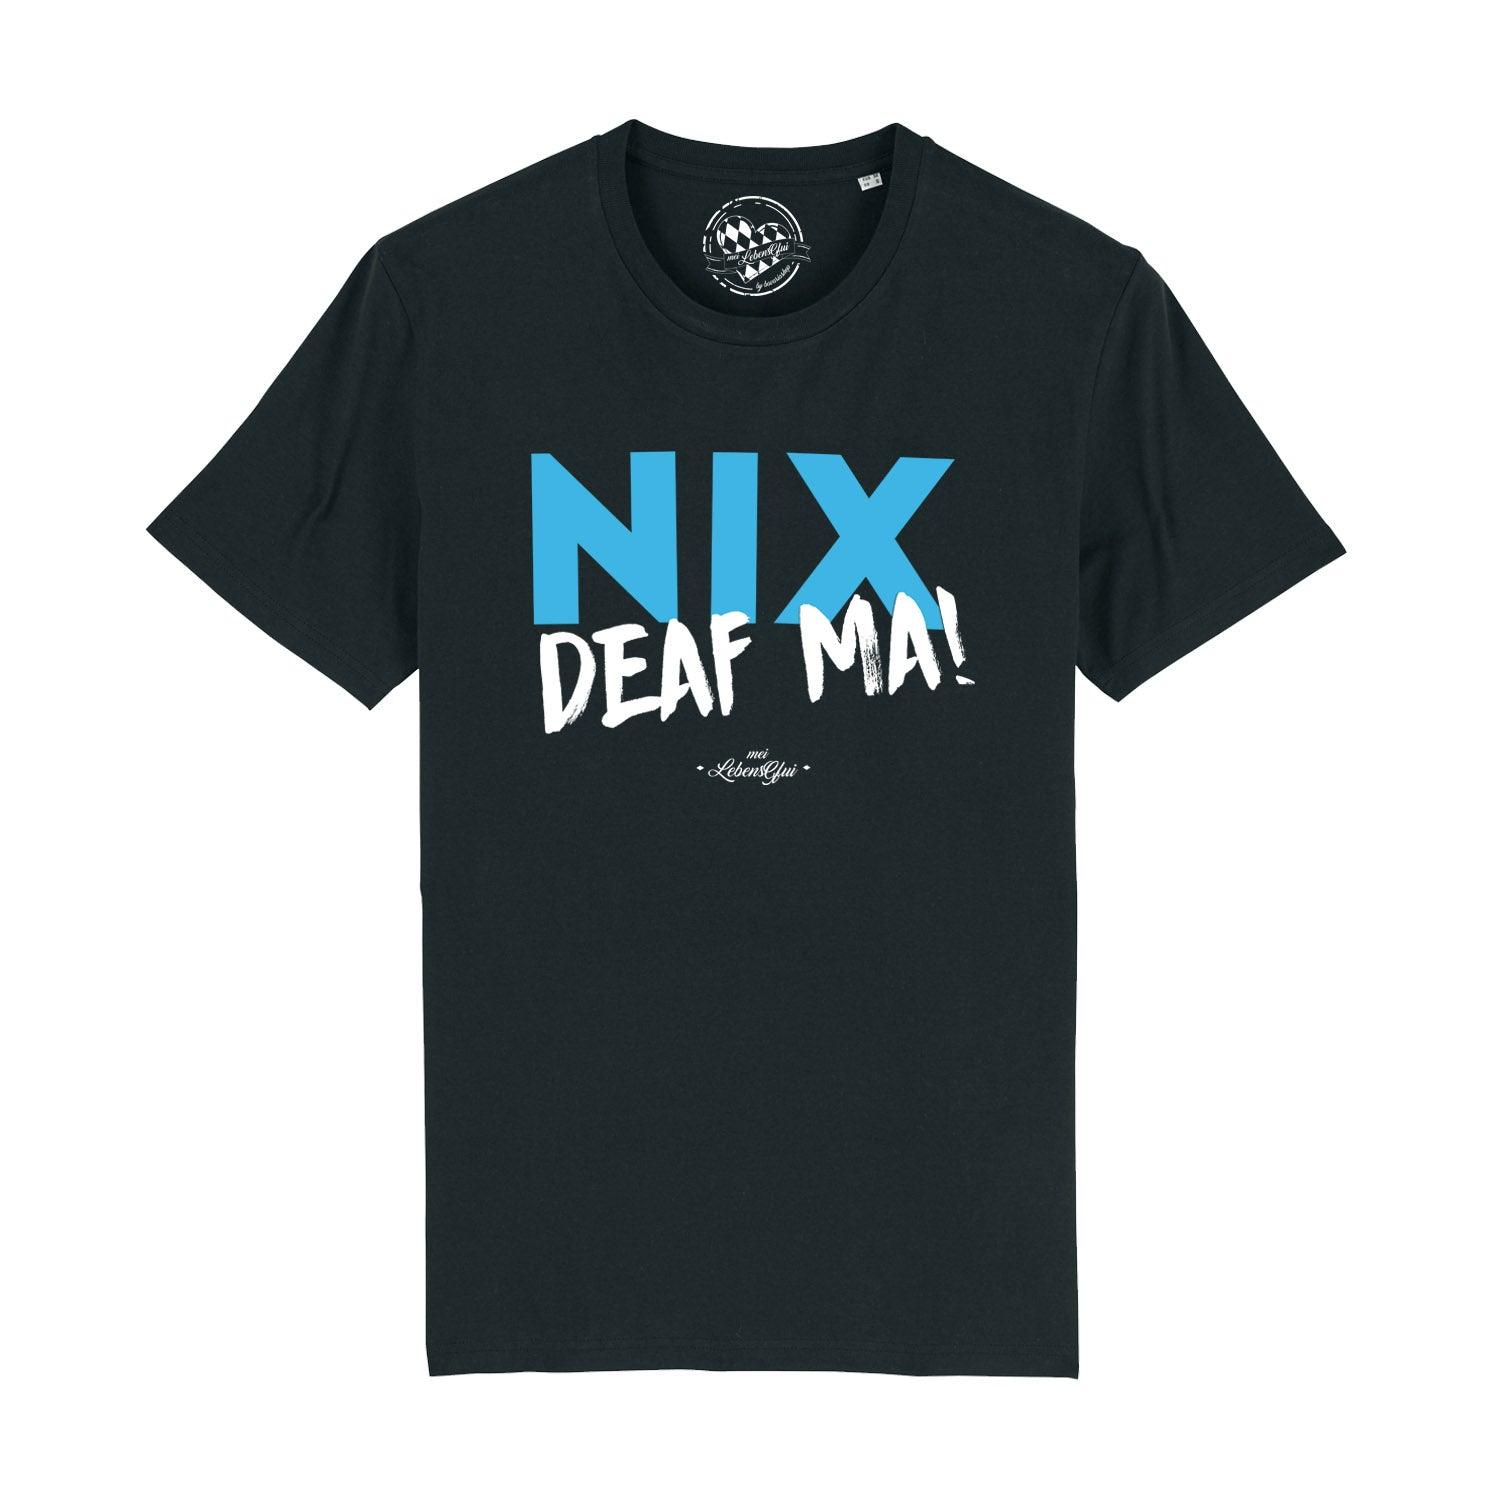 Herren T-Shirt "Nix deaf ma" - bavariashop - mei LebensGfui